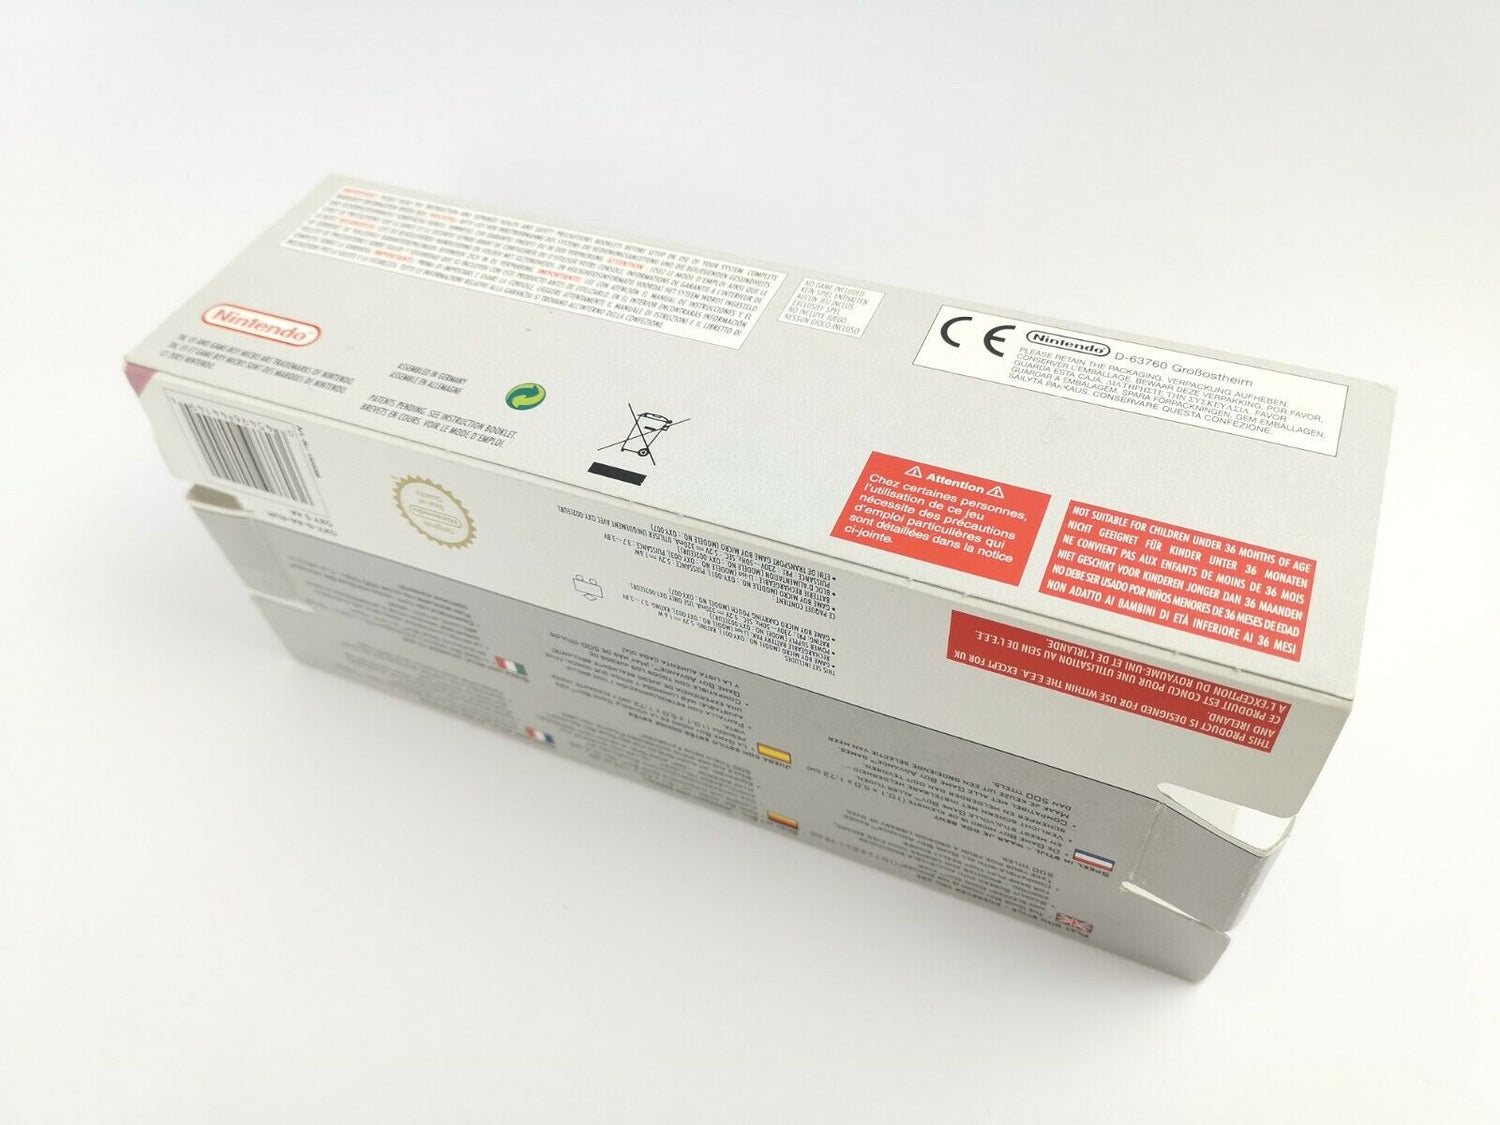 Nintendo Gameboy Micro Konsole 